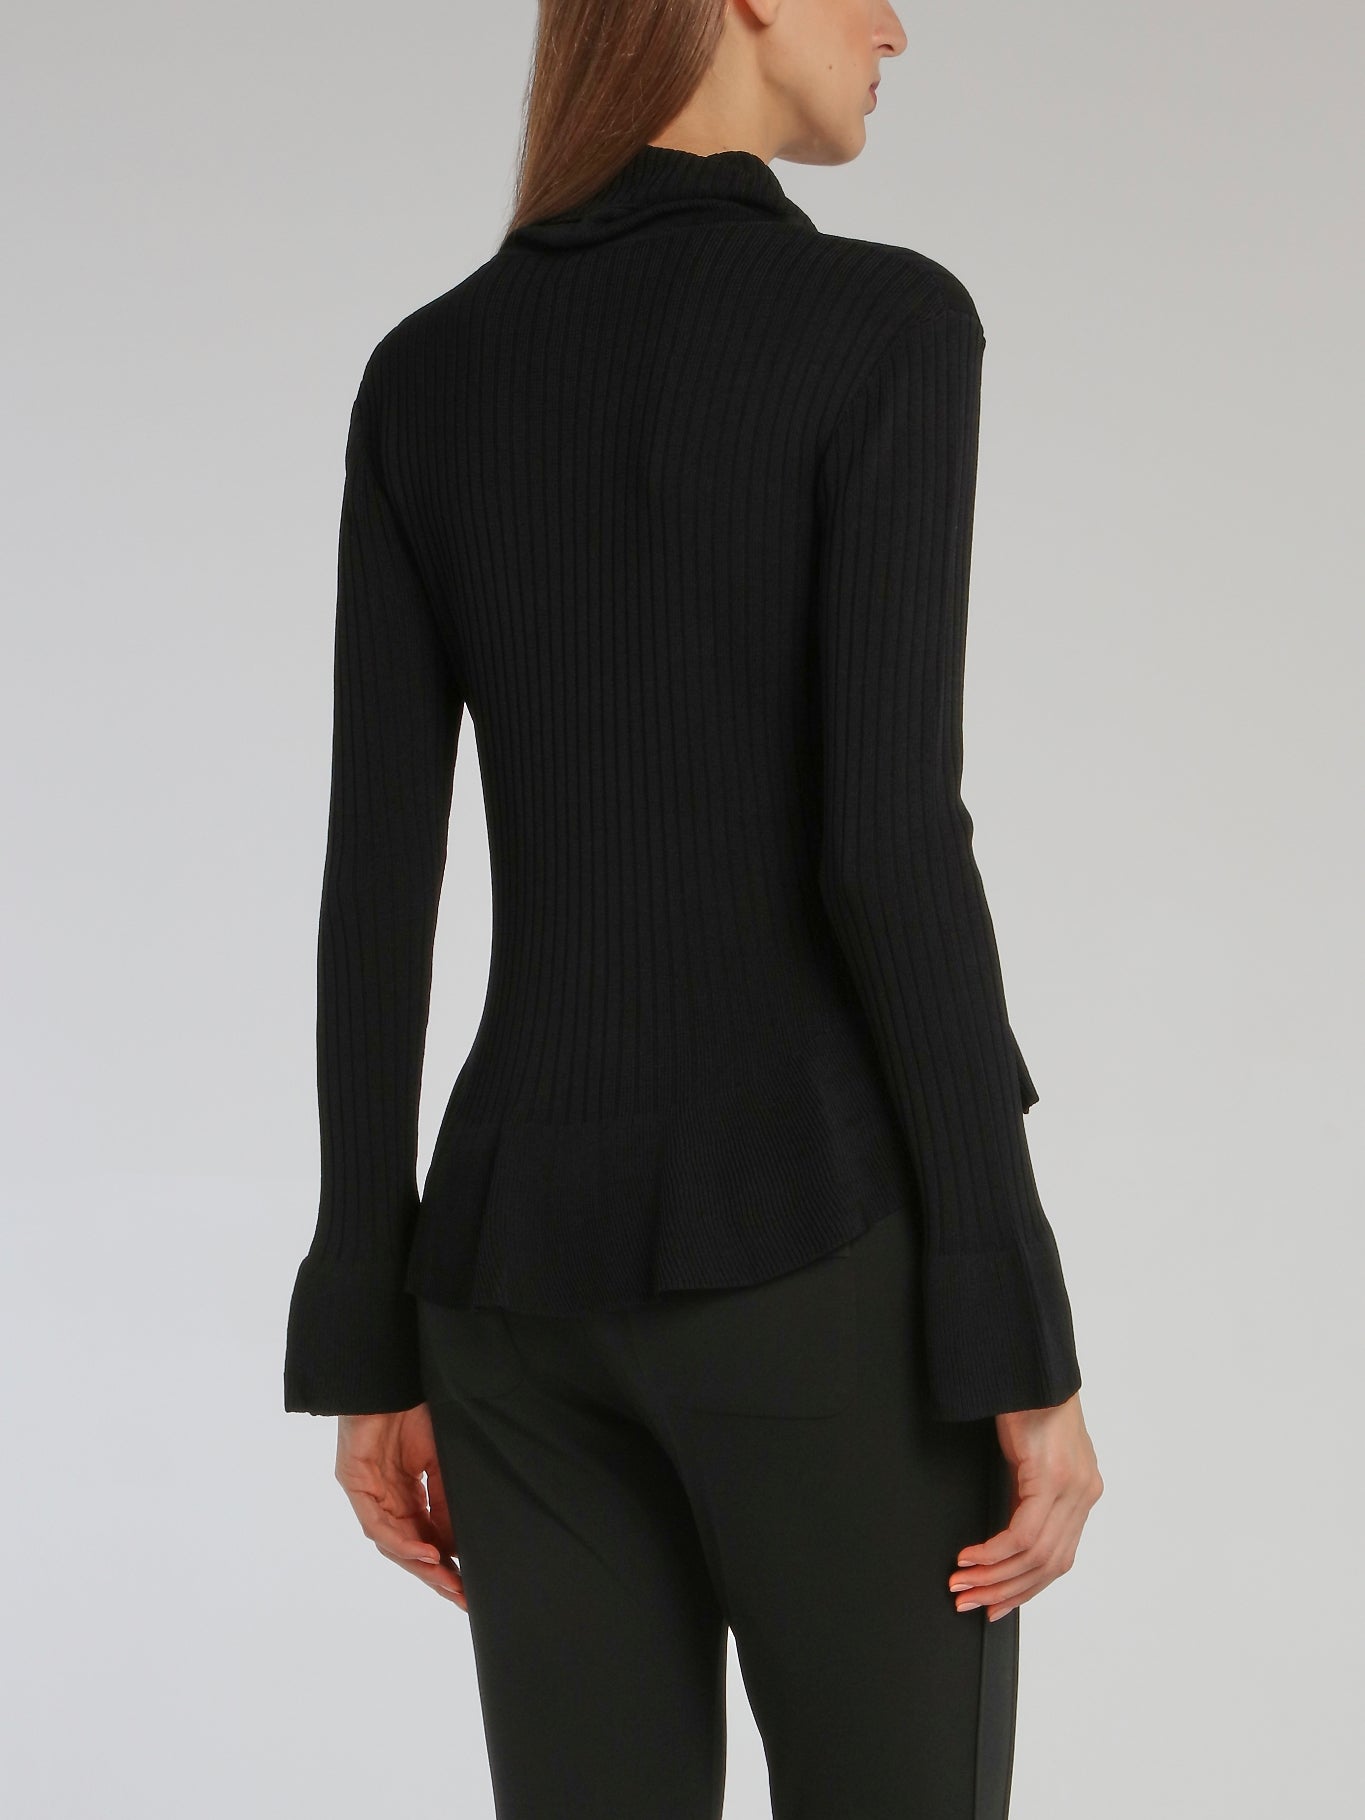 Black Cowl Neck Peplum Sweater Top